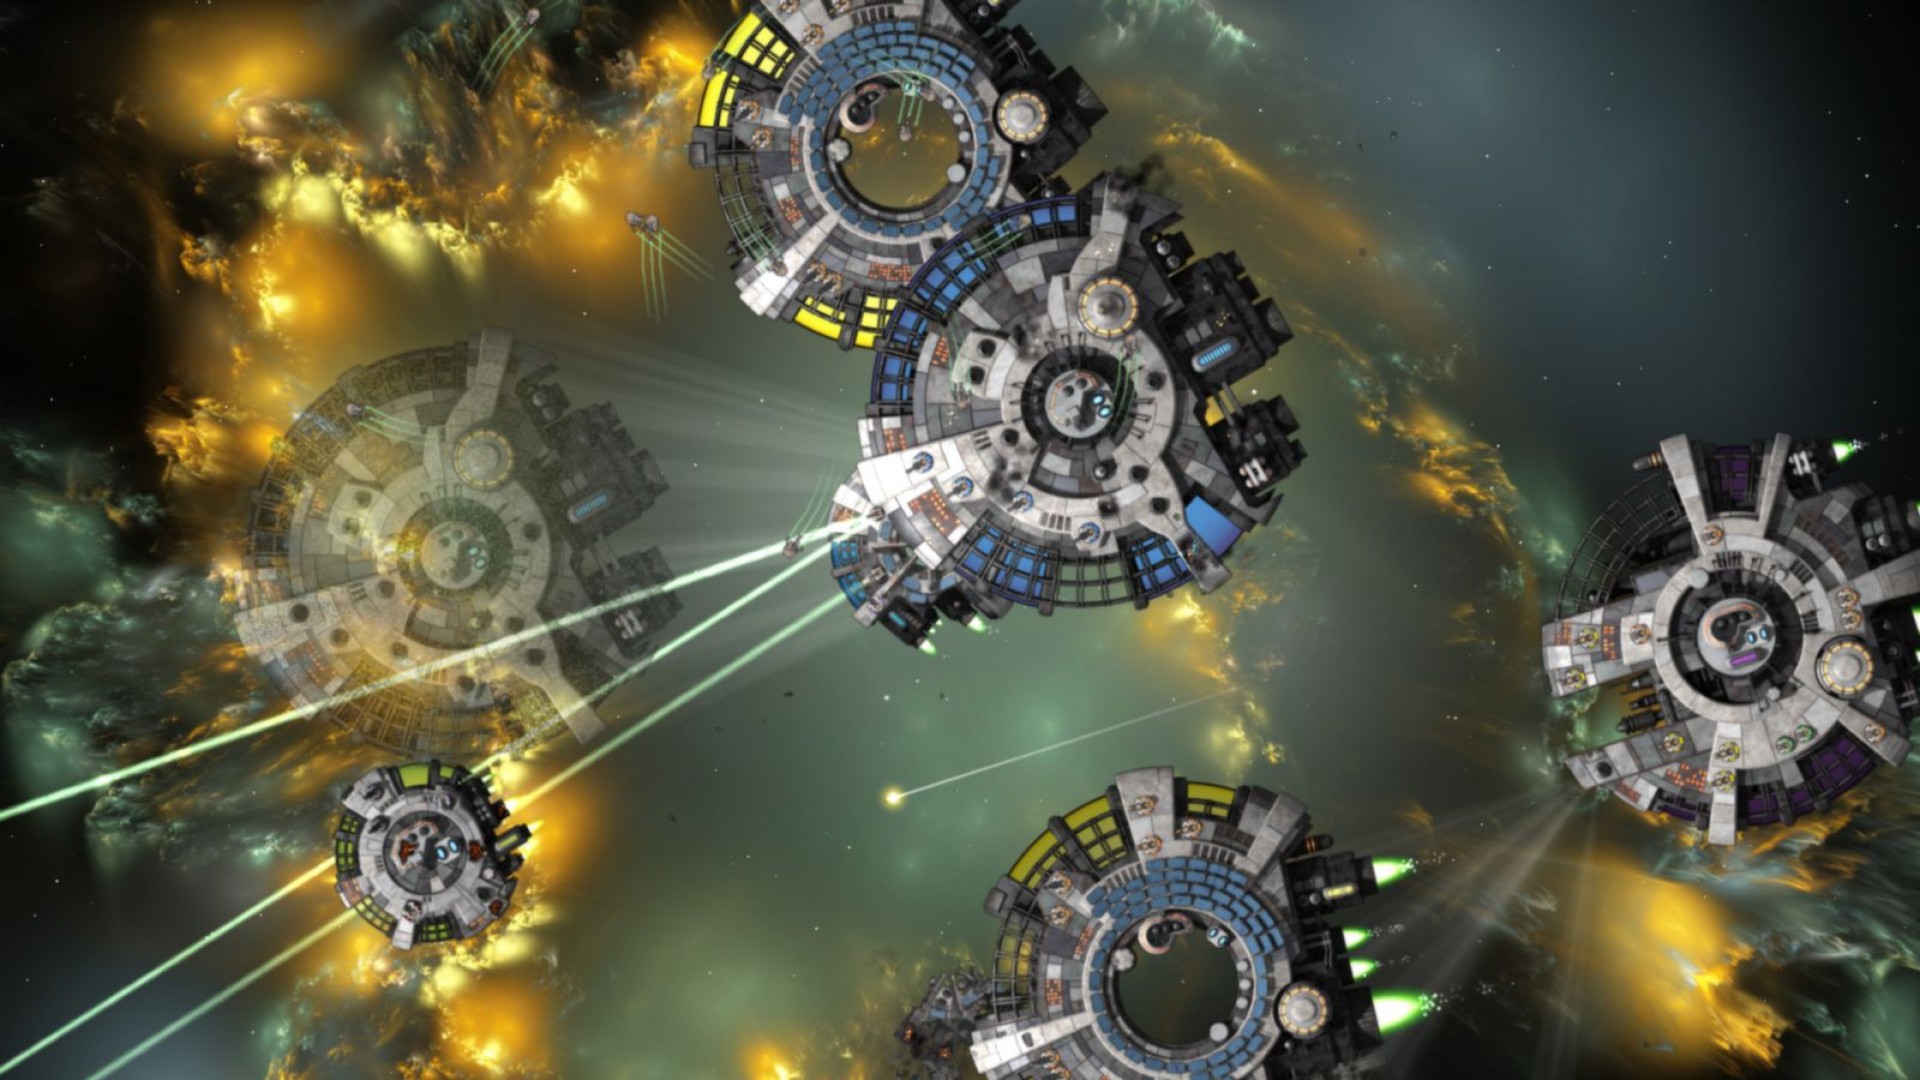 Gratuitous Space Battles: The Outcasts Featured Screenshot #1